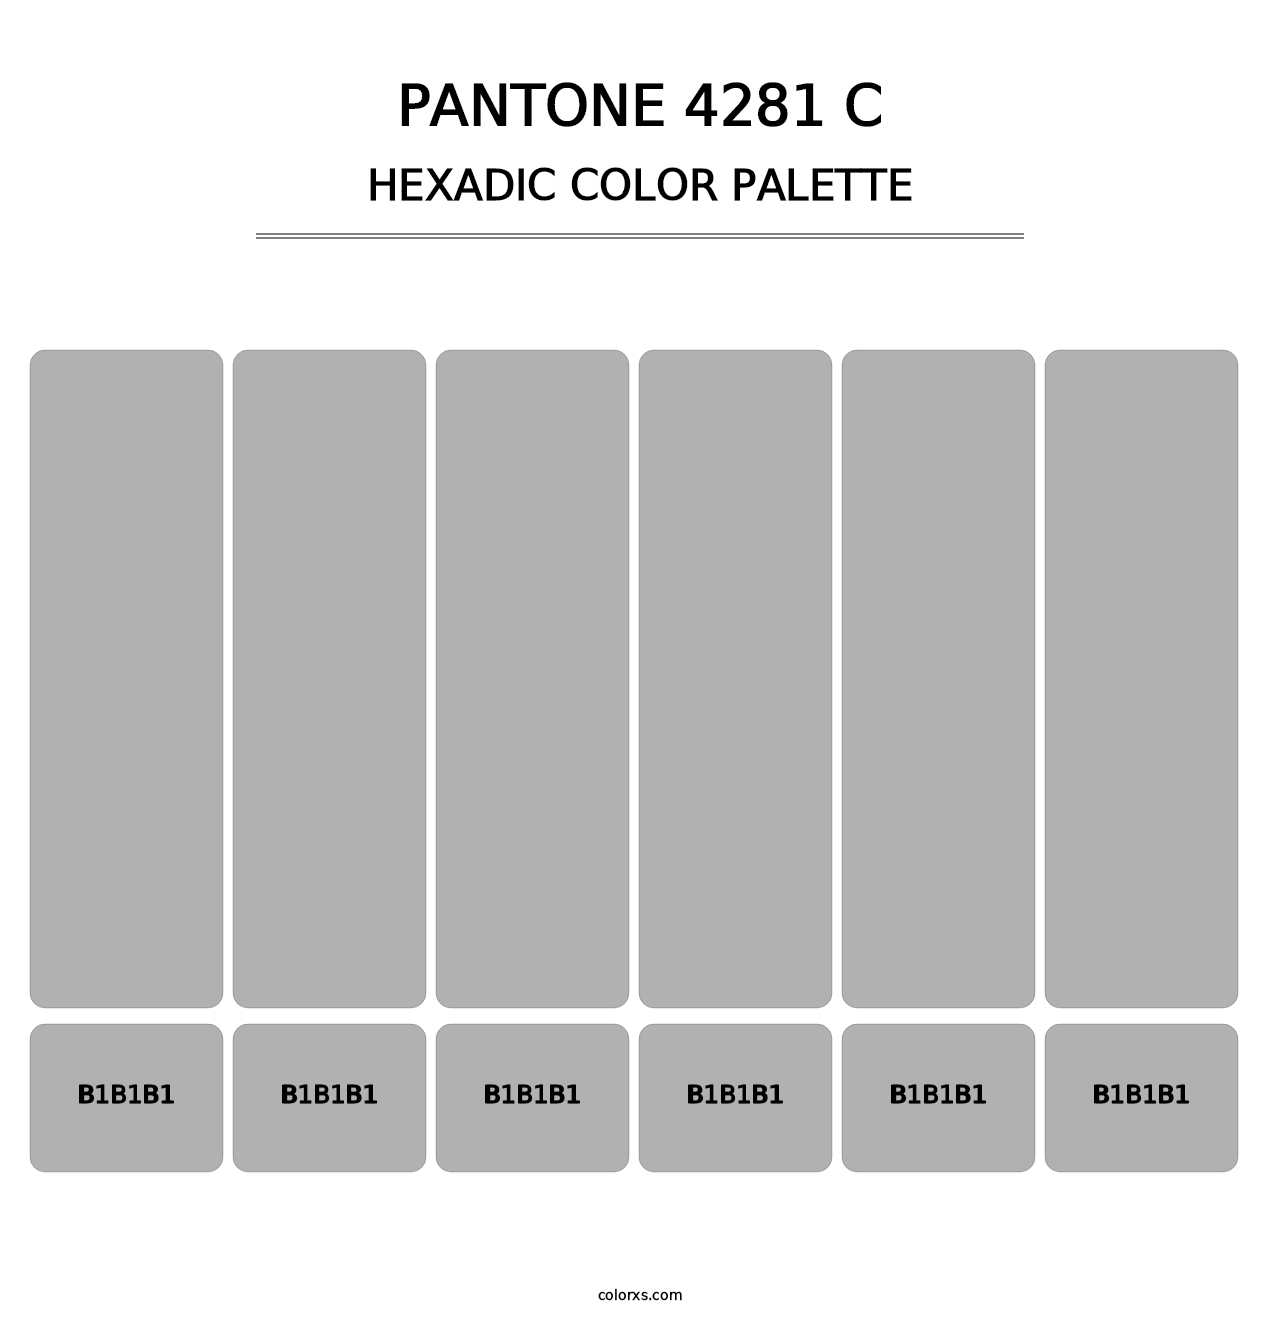 PANTONE 4281 C - Hexadic Color Palette